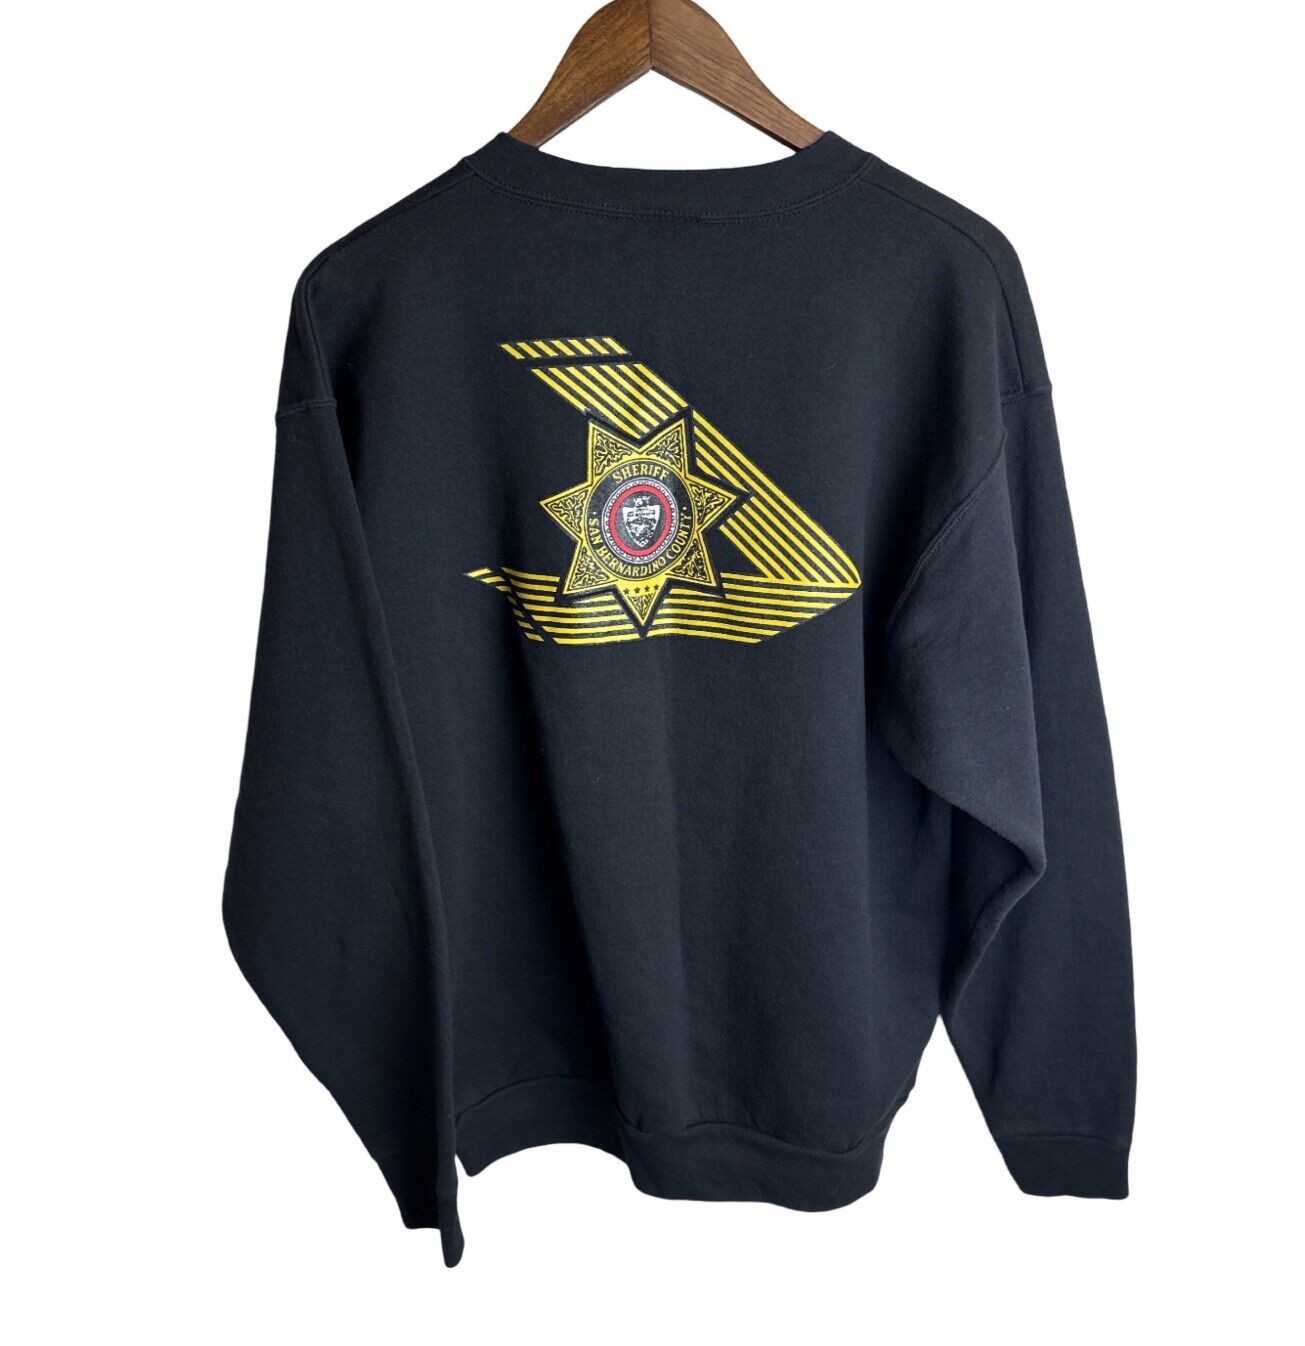 Vintage 80’s San Bernardino County Sheriff Police Crewneck Sweatshirt Size Large